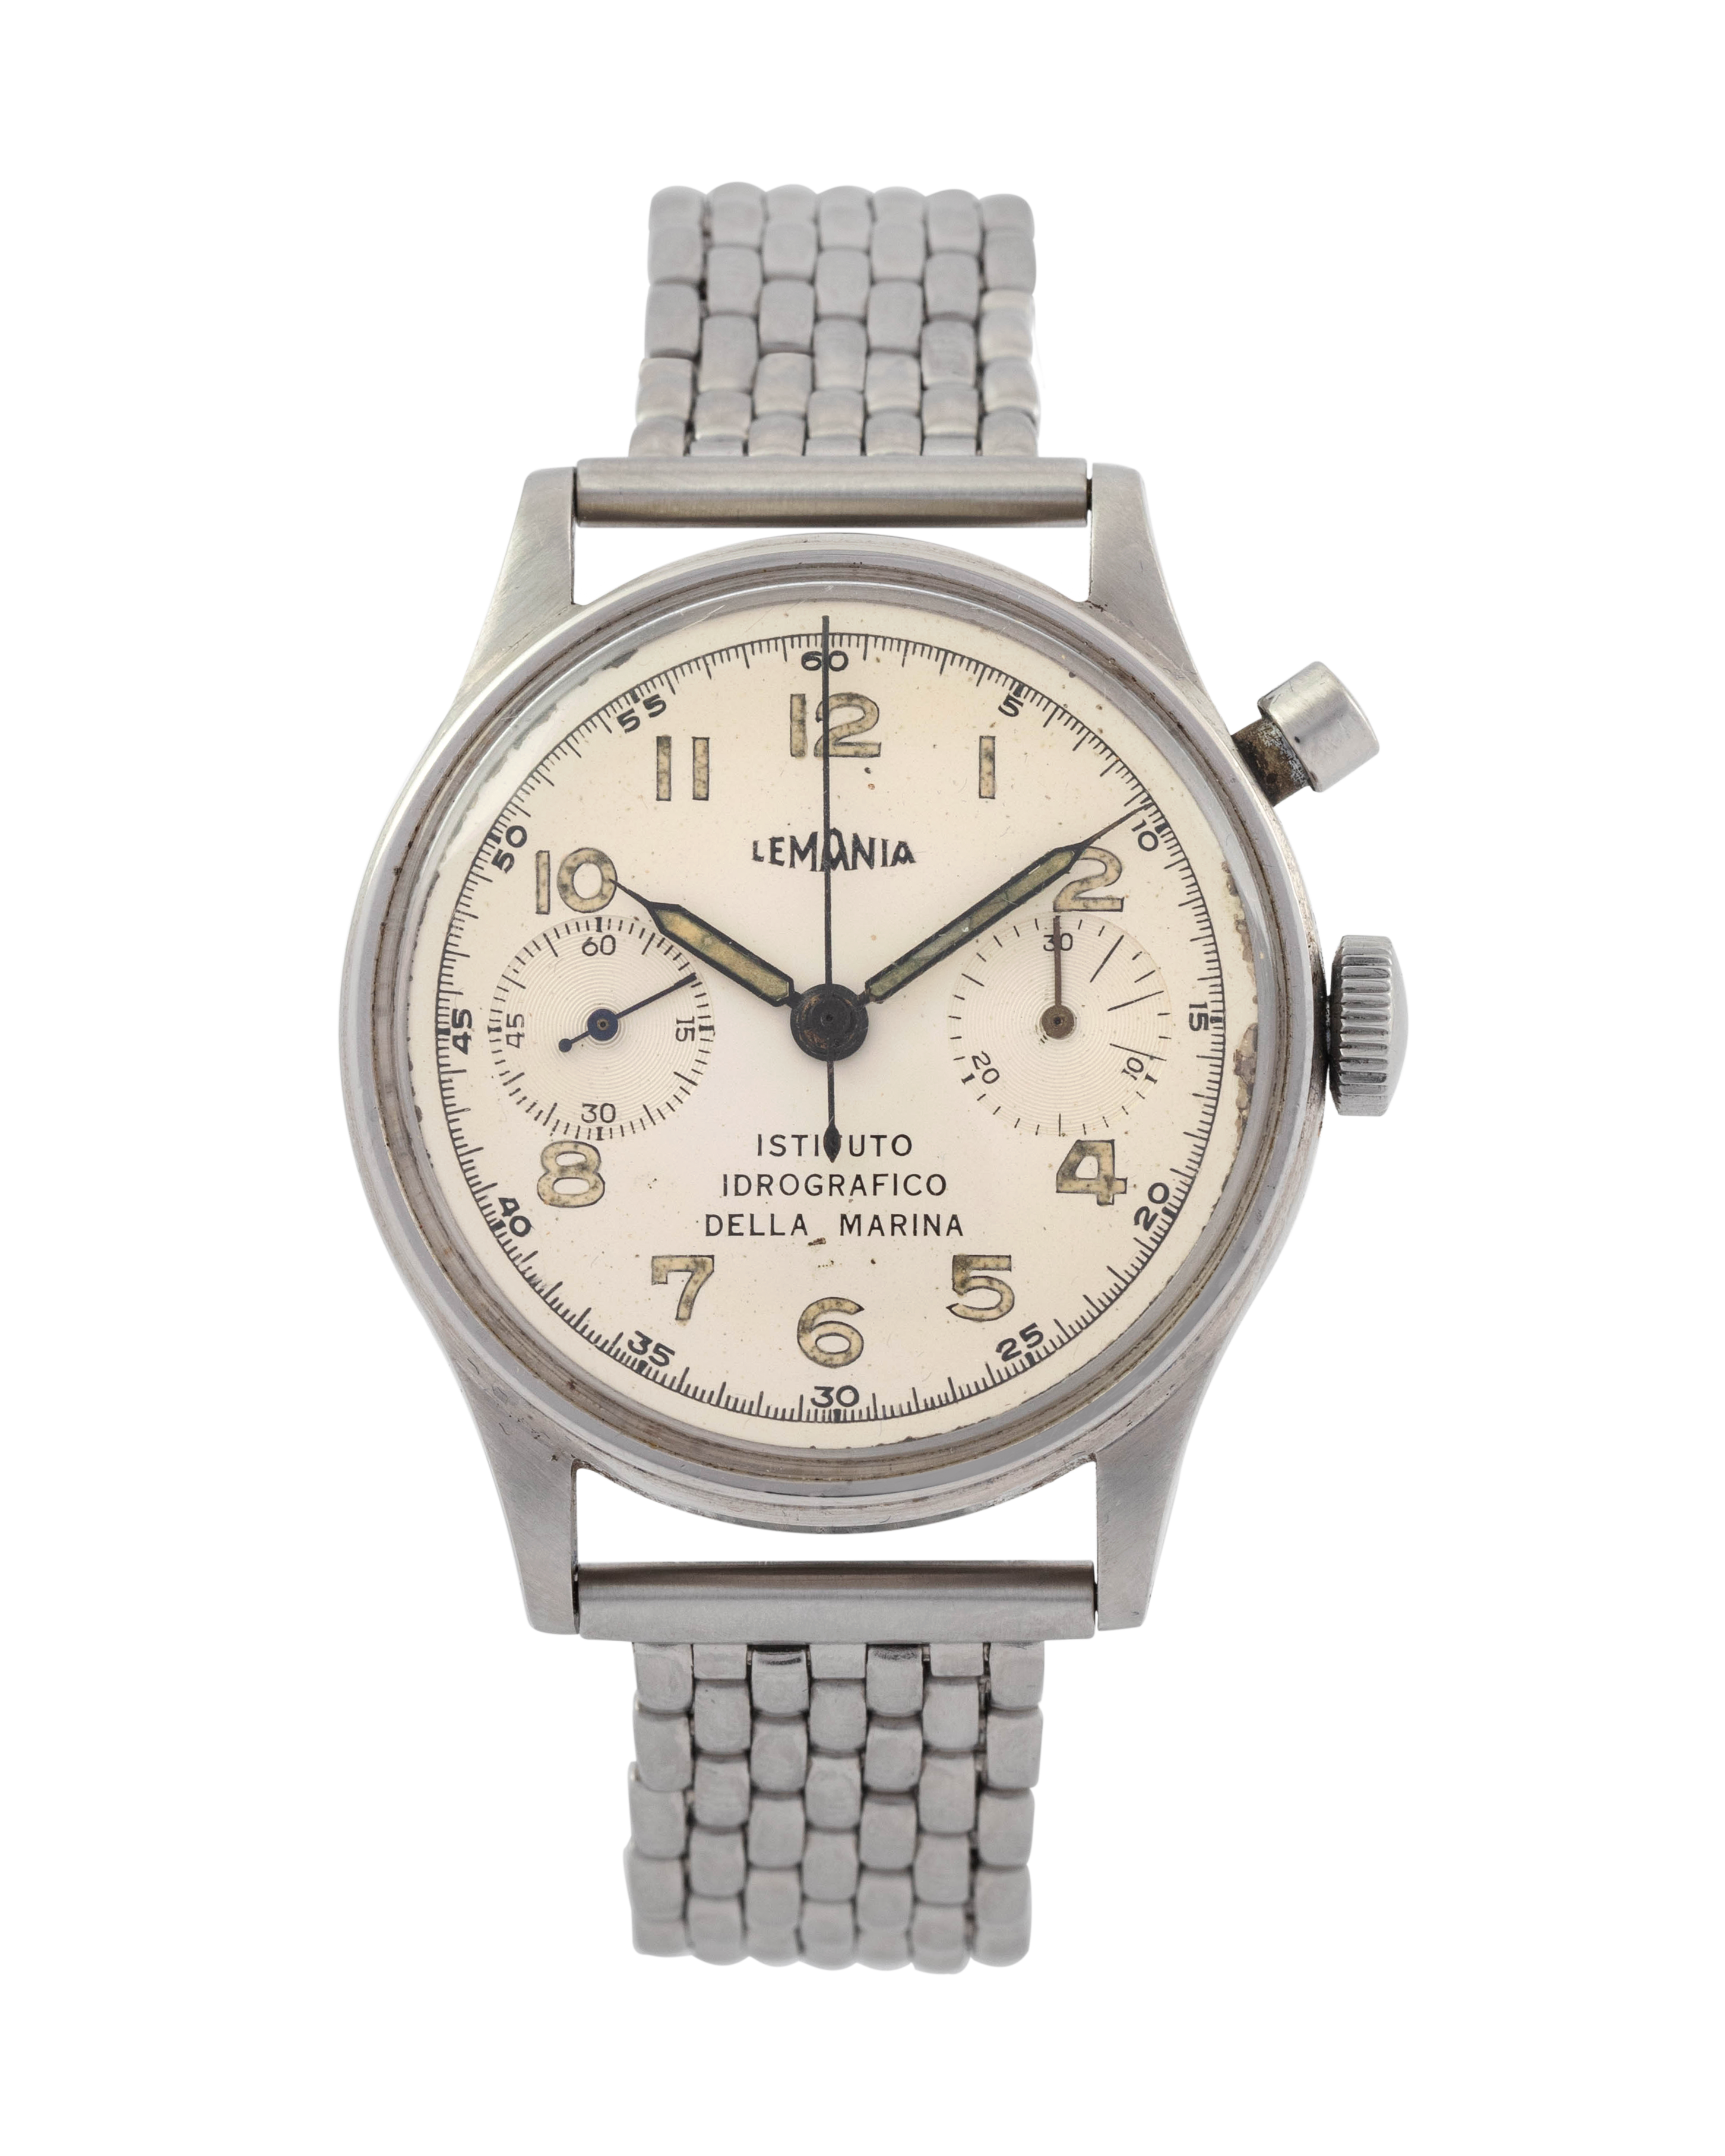 Lemania Chronograph wrist watch  "Istituto idrografico della marina" - white dial, stainless steel with bracelet 